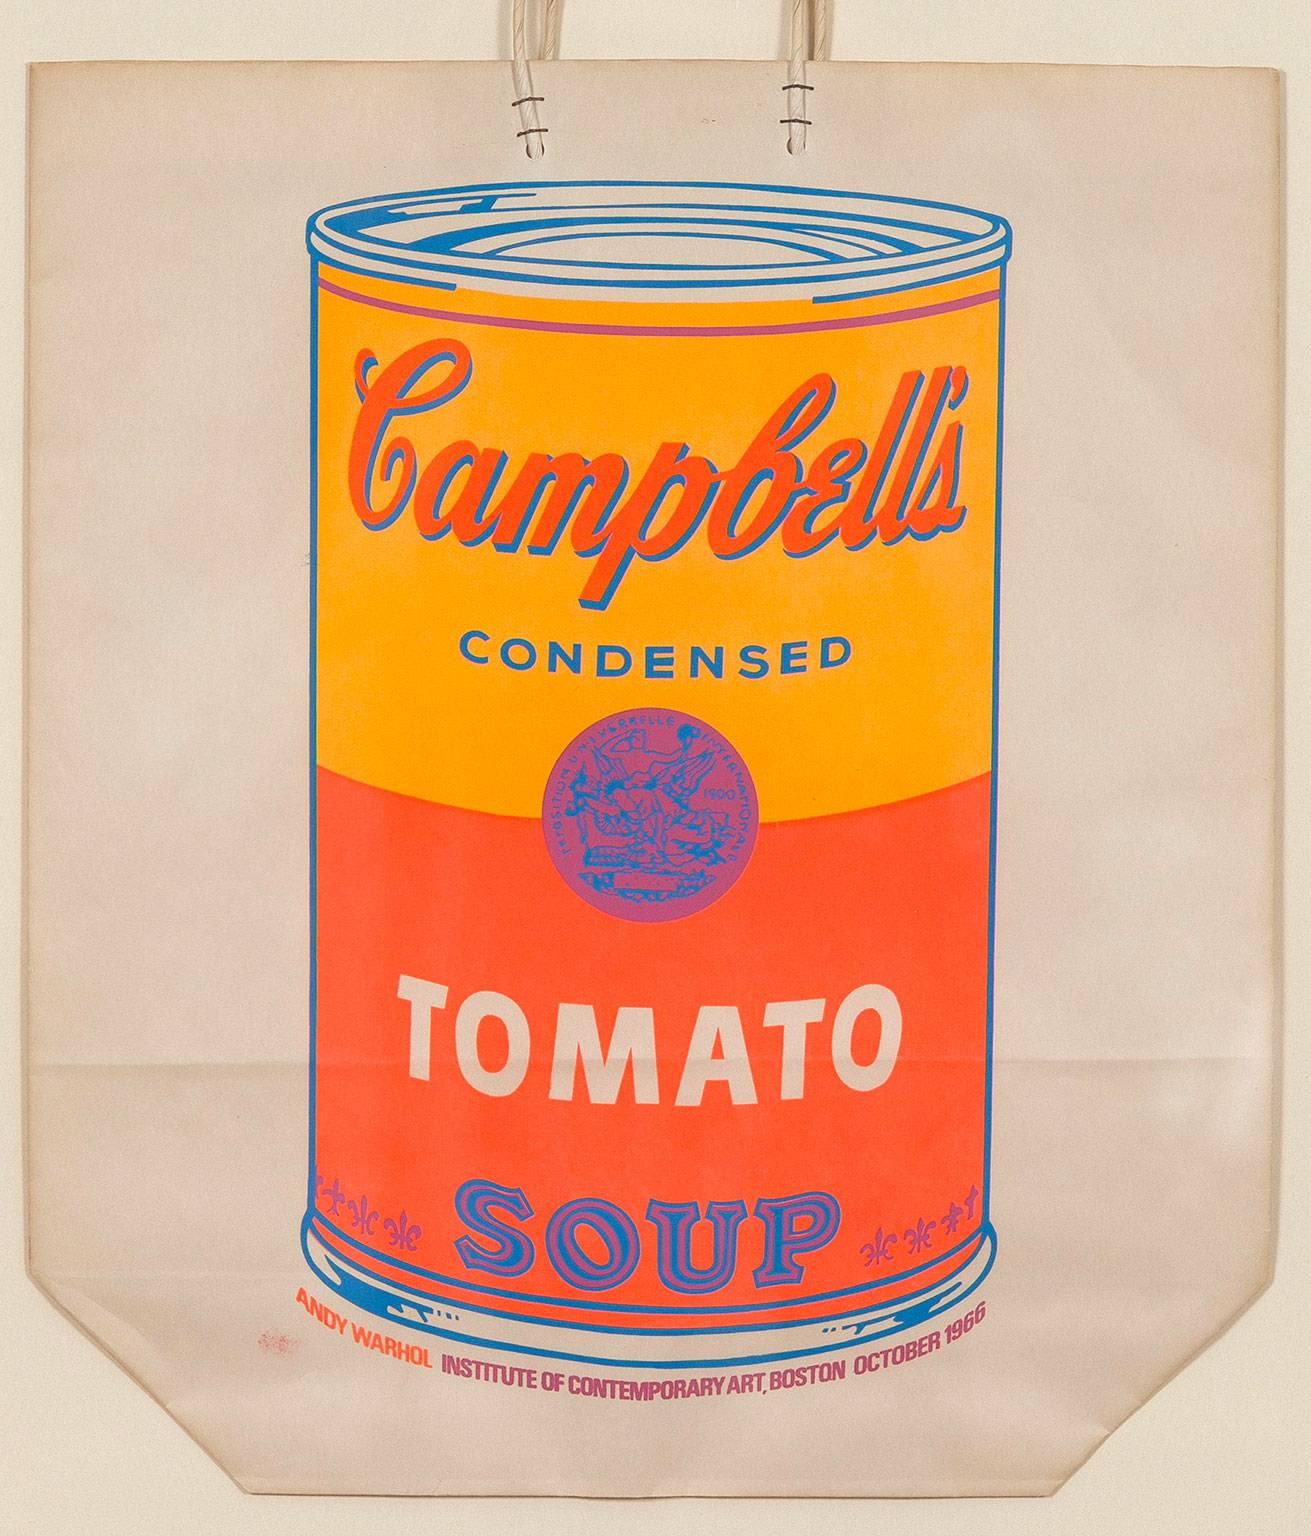 Andy Warhol Abstract Print - Soup Can Bag